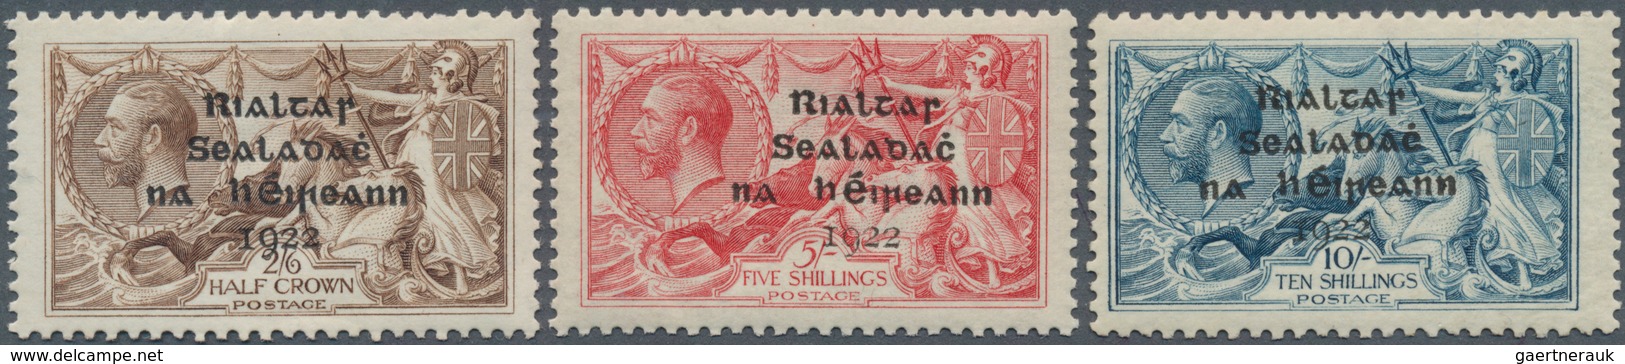 14306 Irland: 1922, "Rialtas" Overprints, Dollard Printing, Three High Values Unmounted Mint (few Irregula - Storia Postale